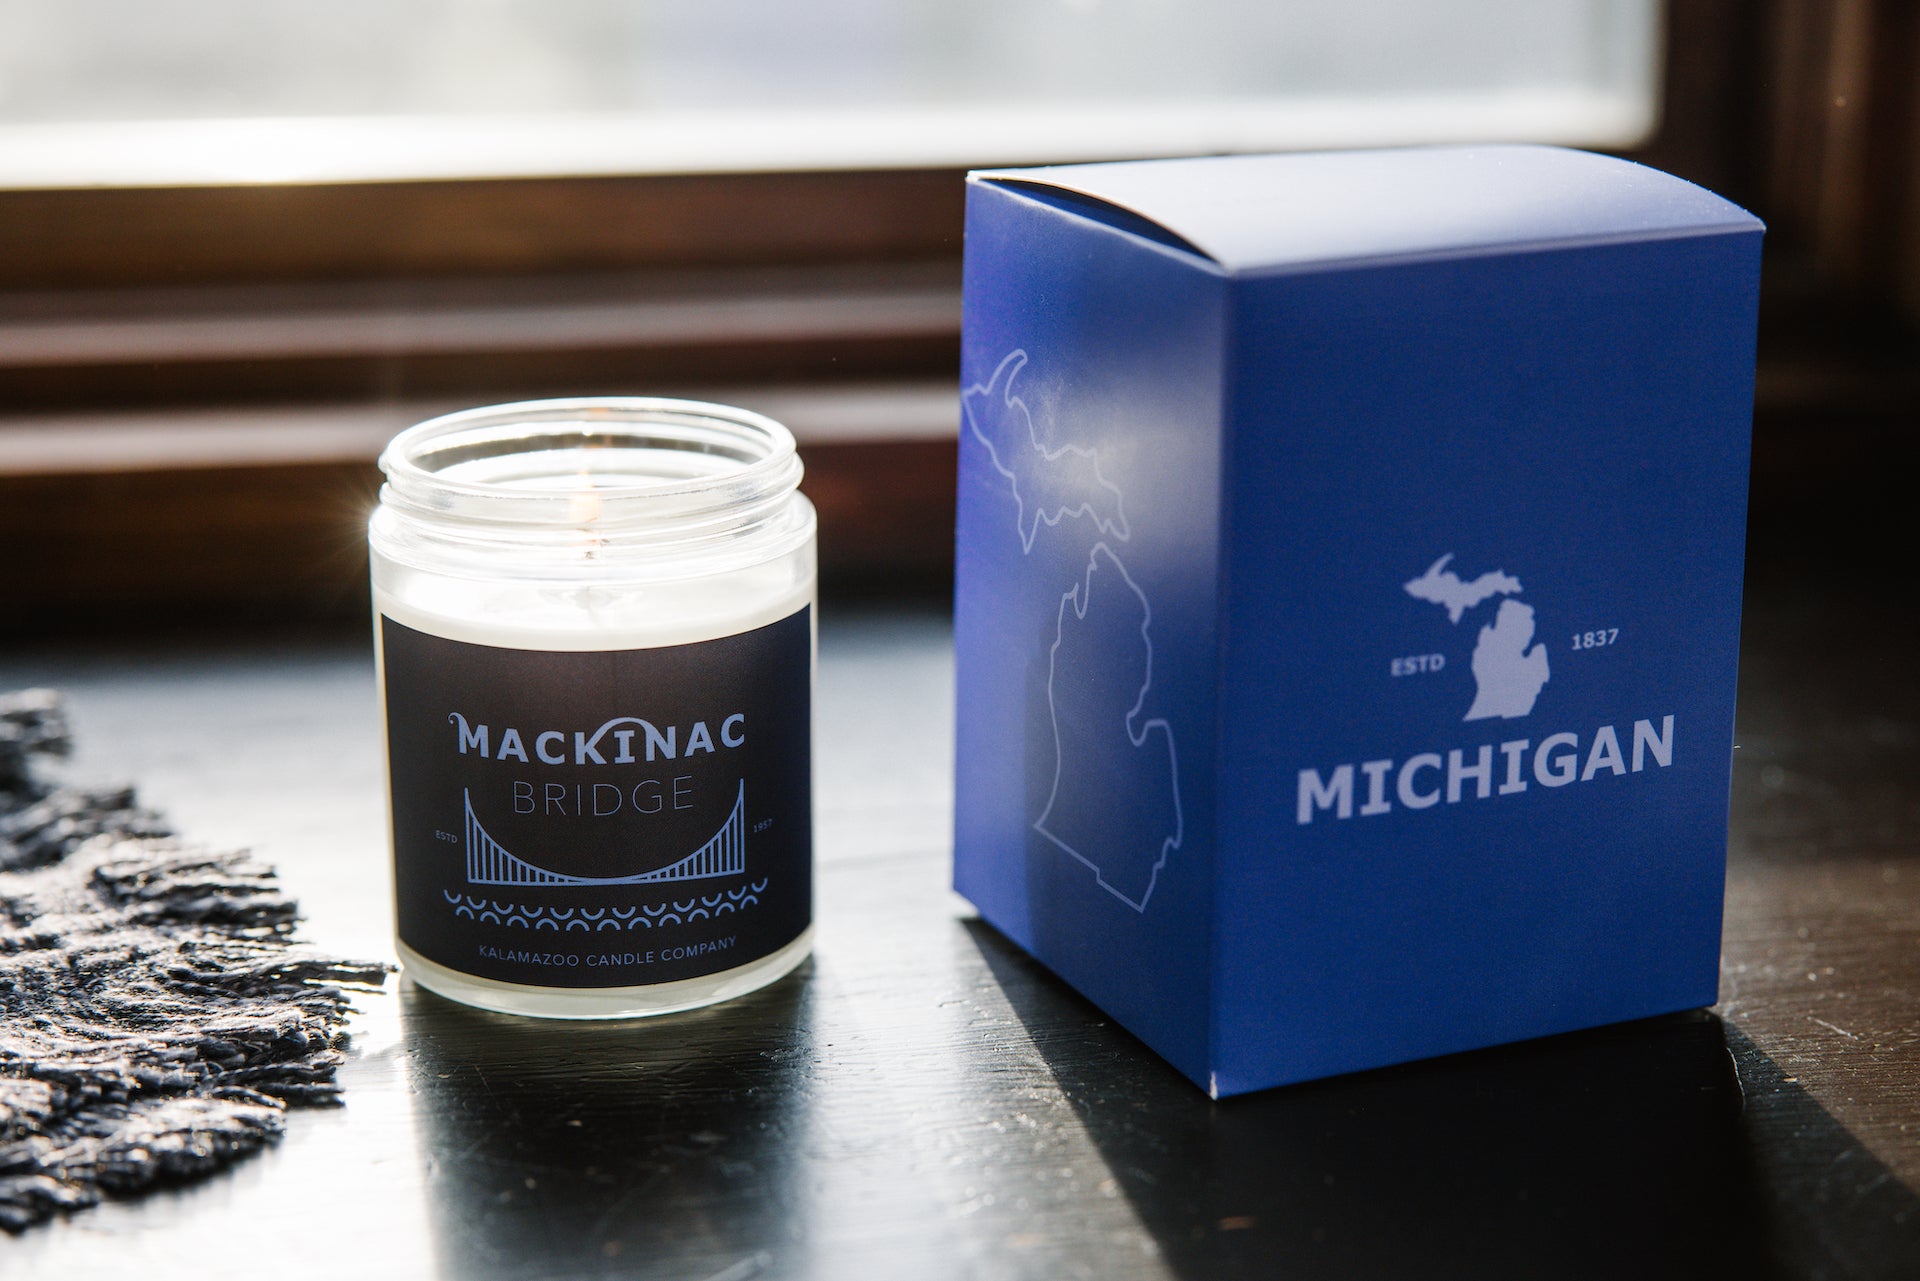 Mackinac bridge candle next to gift box.